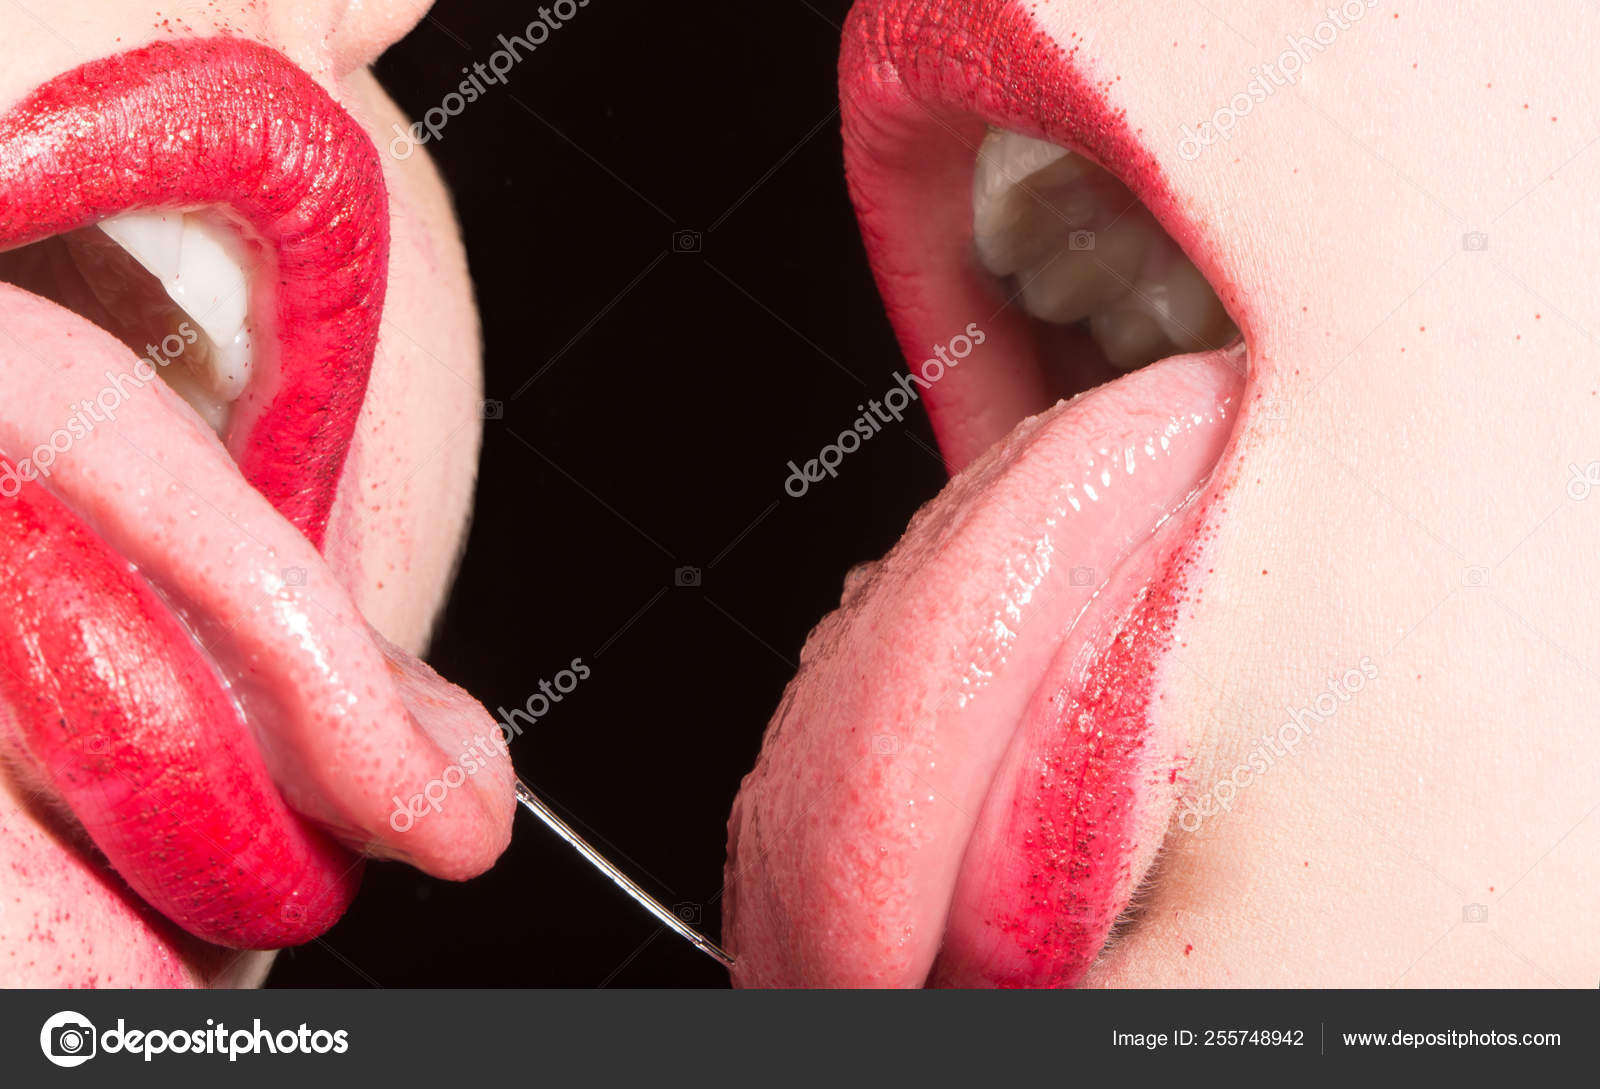 baisers lesbiennes sexy langue 